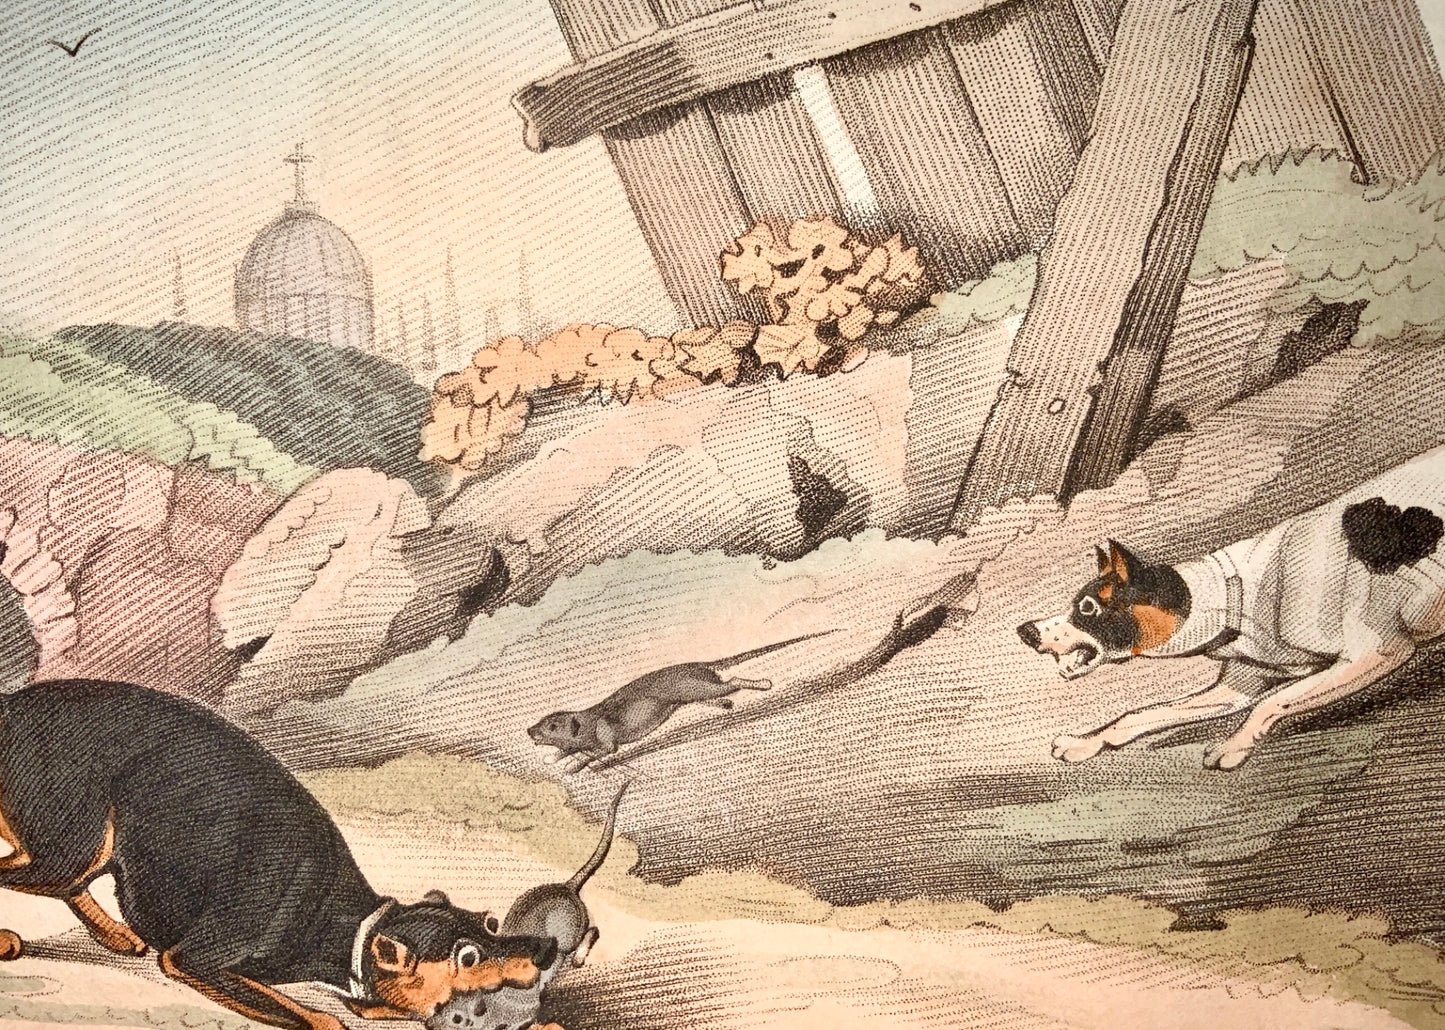 1823 Sherwood after Alken - RAT HUNTING - hand coloured aquatint